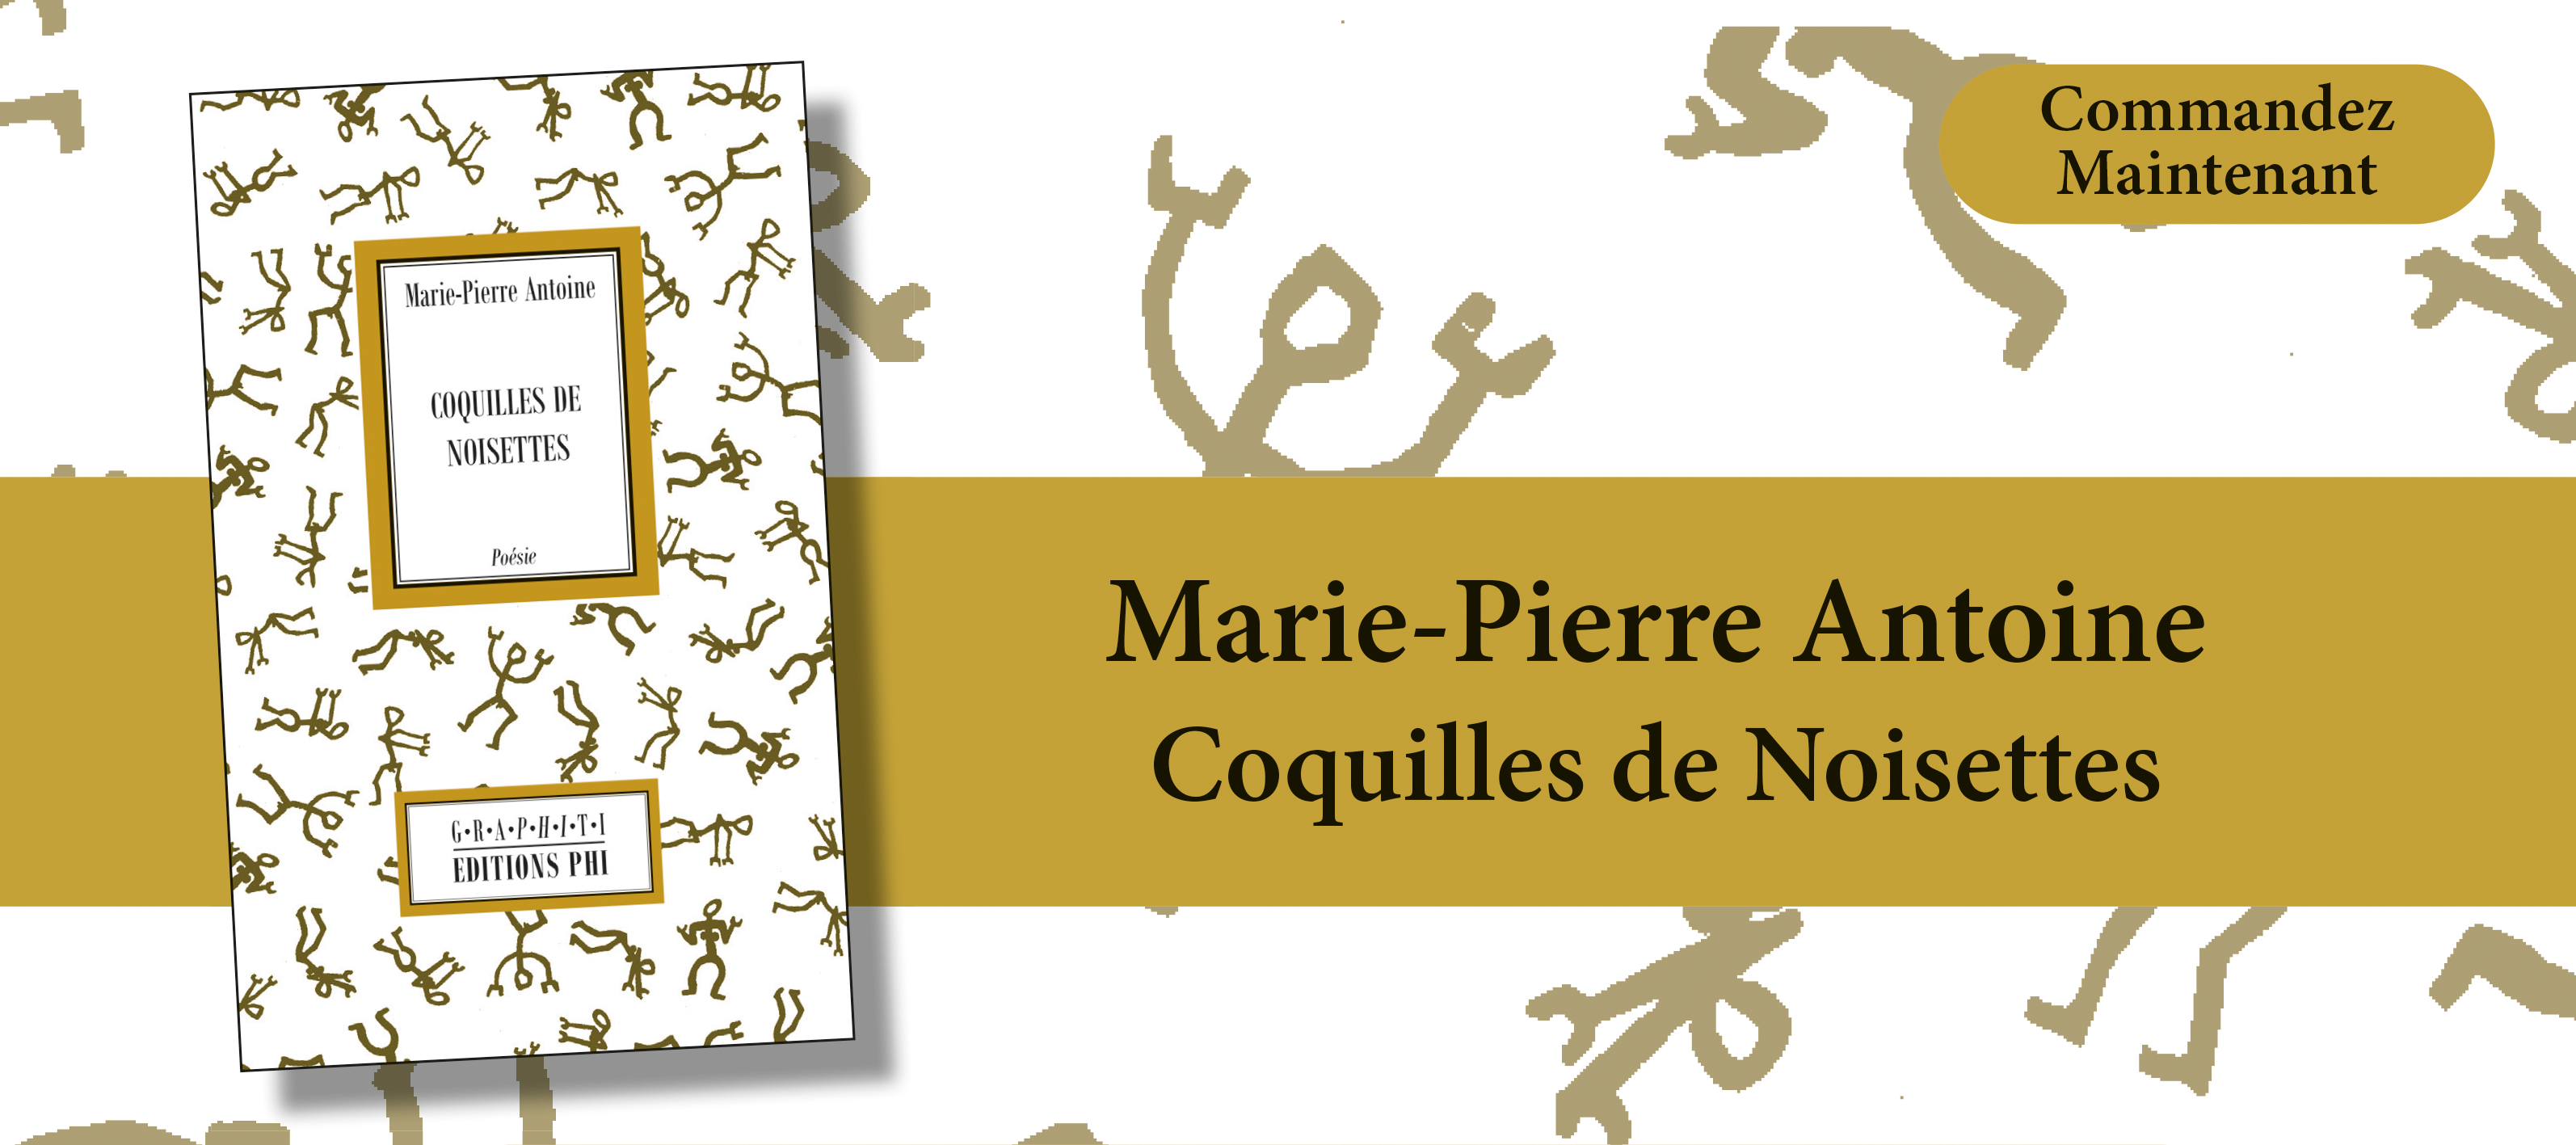 http://www.editionsphi.lu/fr/home/544-marie-pierre-antoine-coquilles-de-noisettes.html